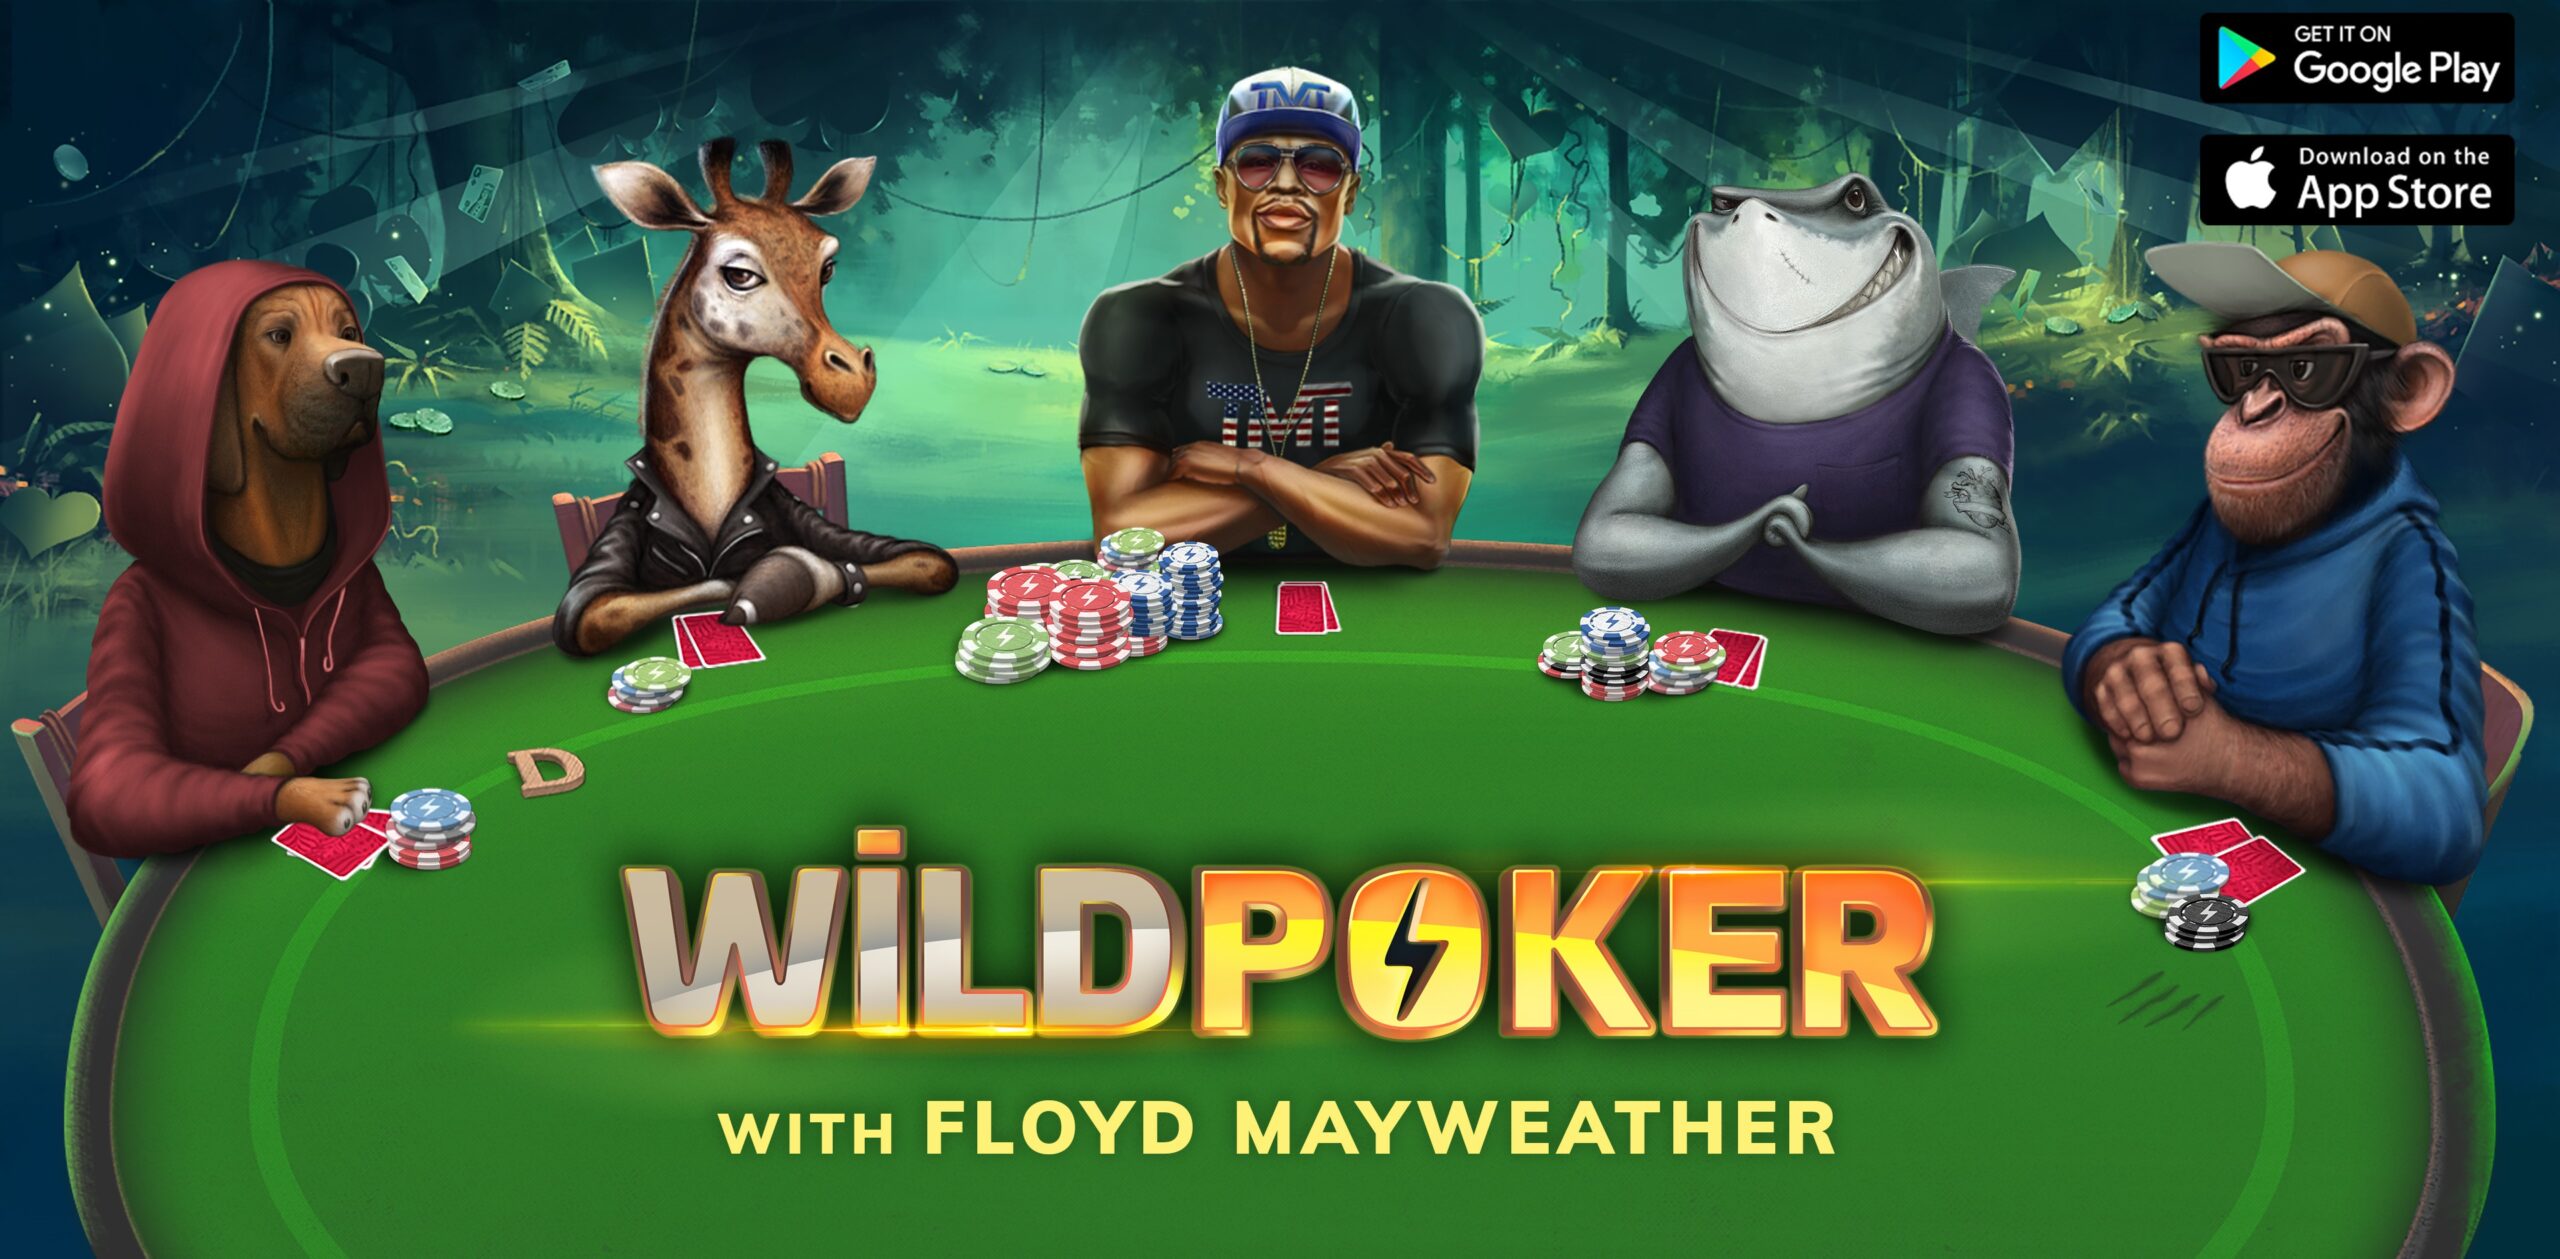 Floyd Mayweather Throws His Weight Behind ‘Wild Poker’ Social Media App